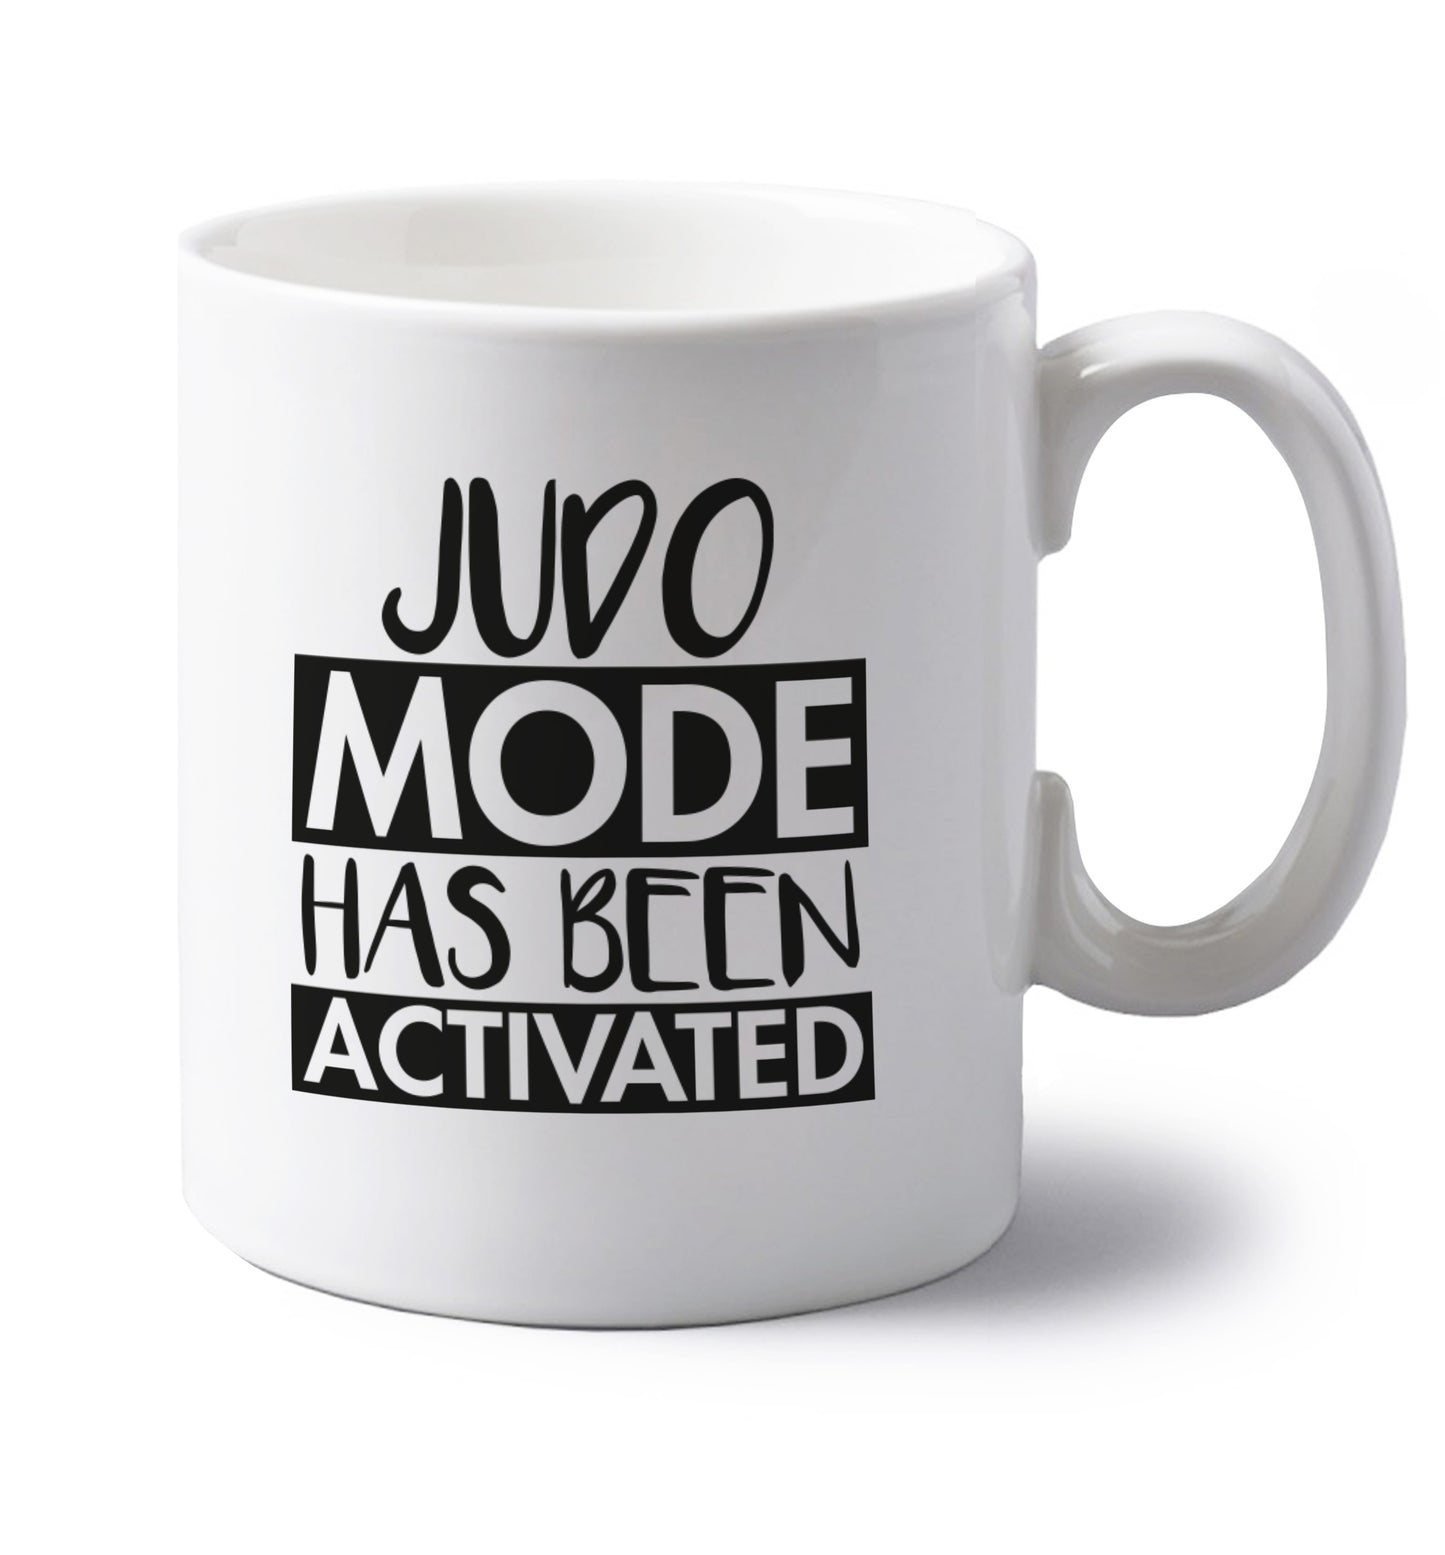 Judo mode activated left handed white ceramic mug 